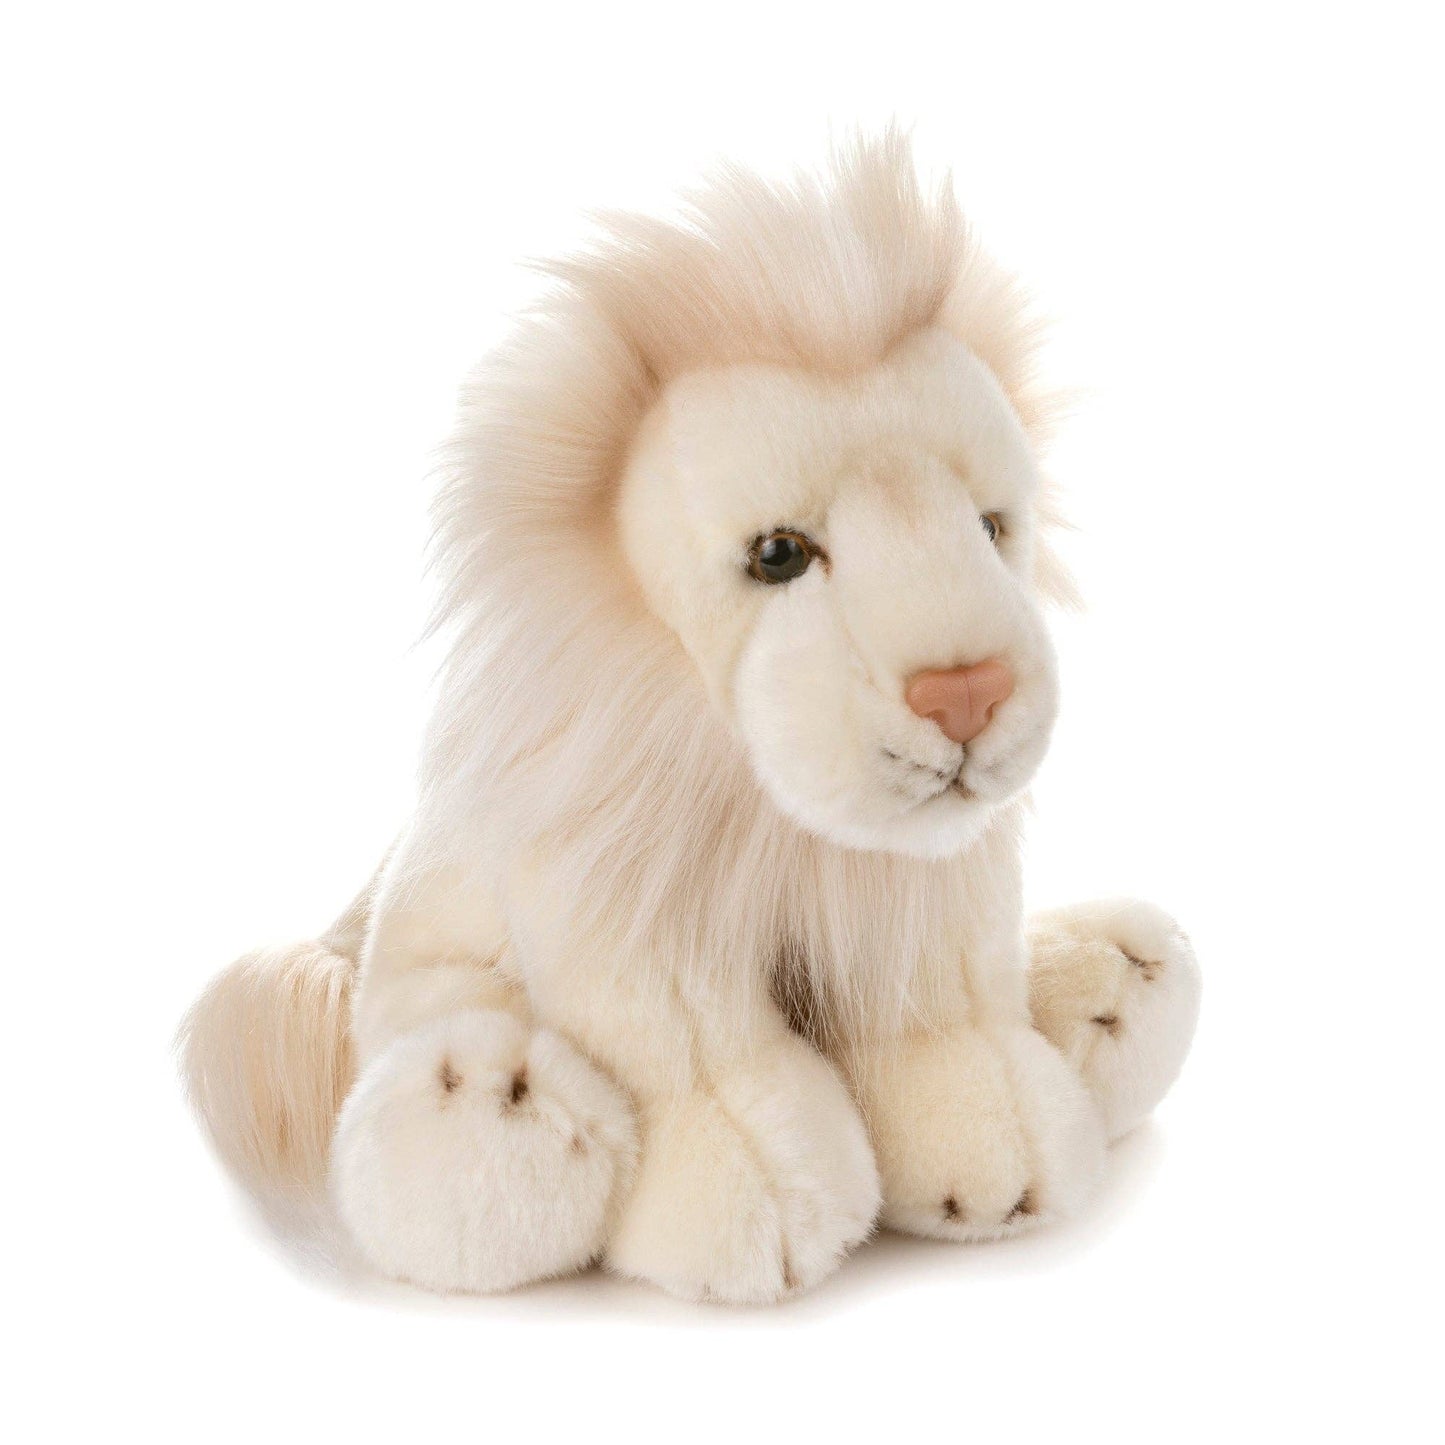 12" Stuffed White Lion